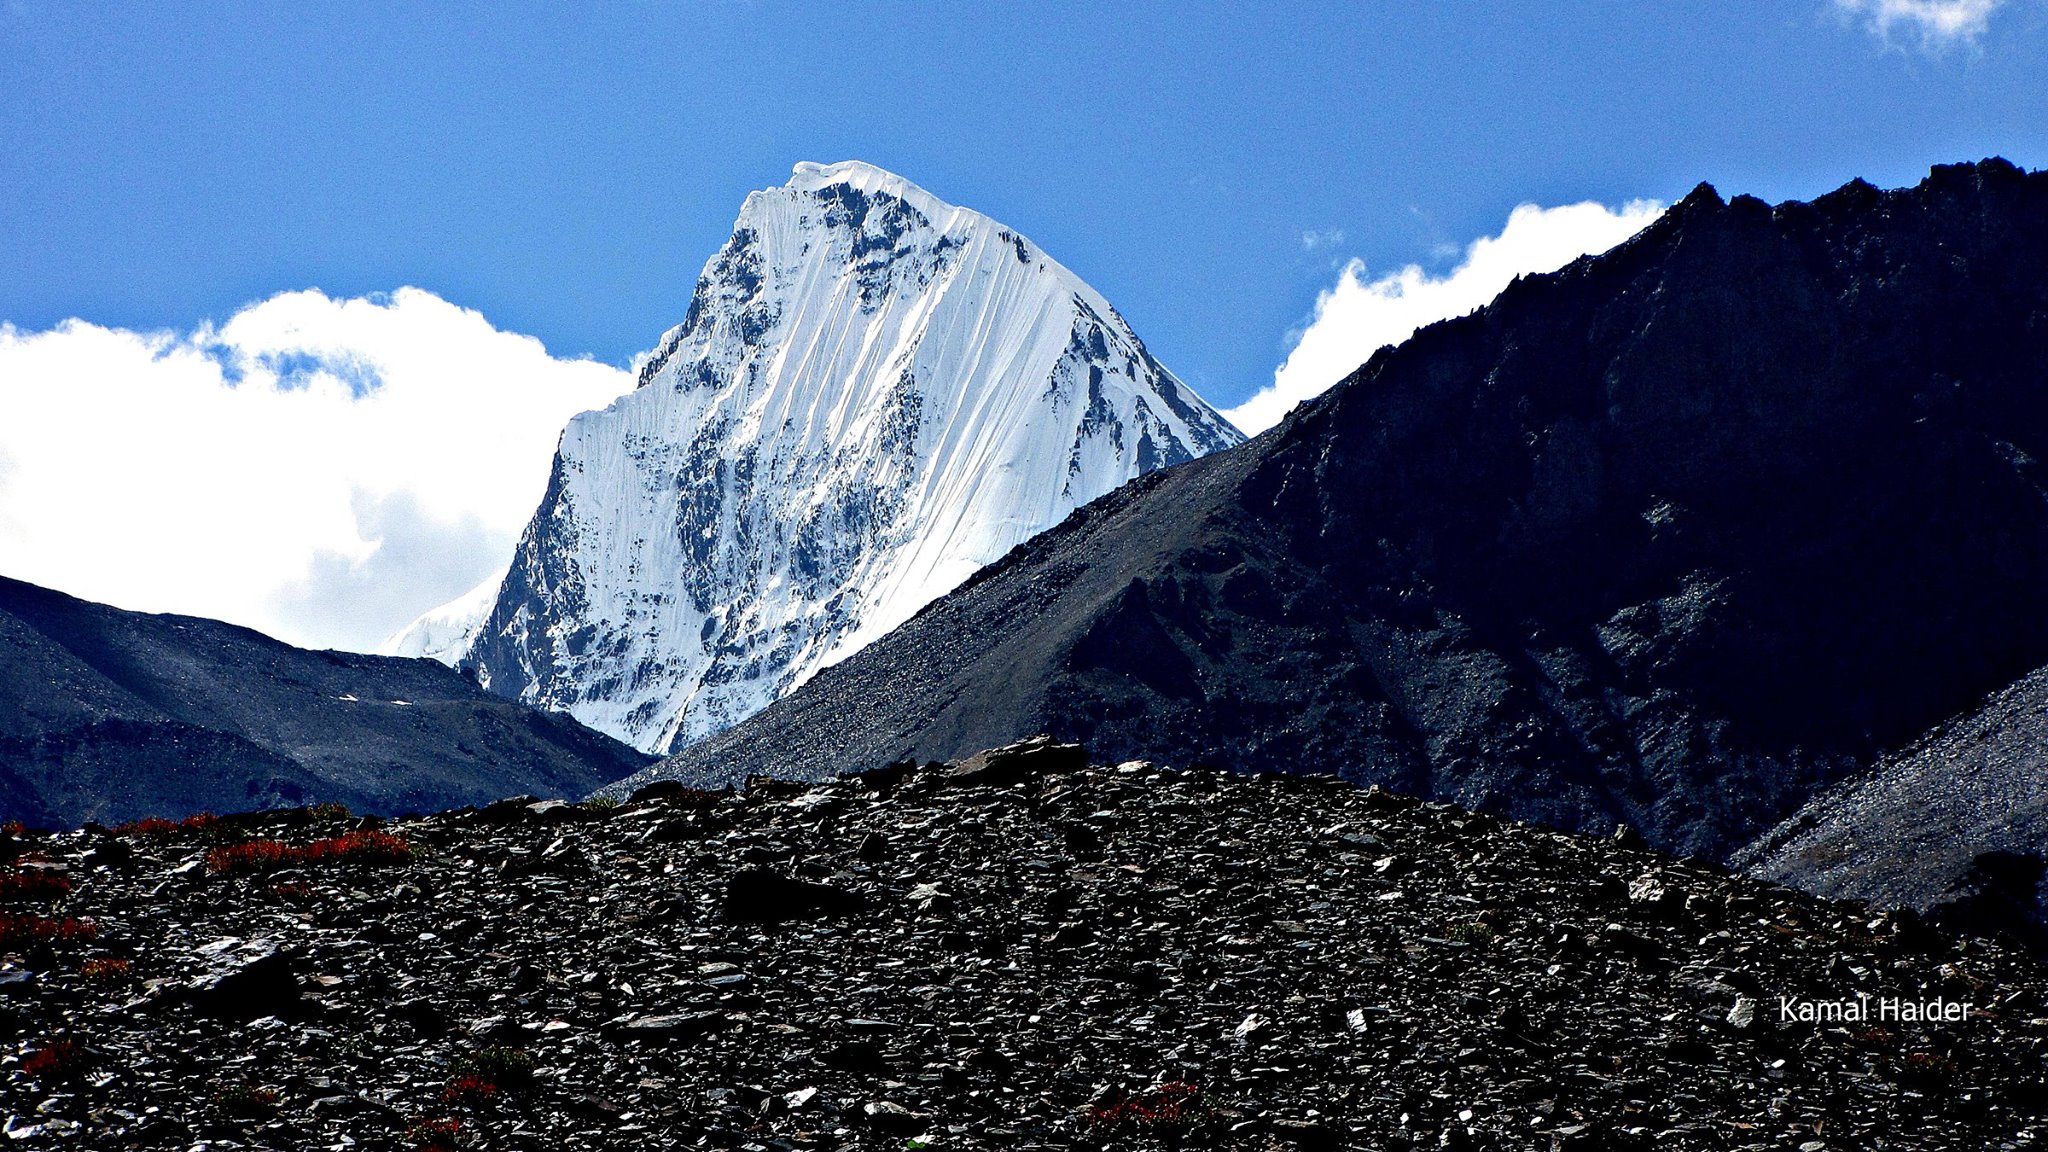 Ghujerab Mountain Range. Kuksil valley Gojal. Kuksail/Kuksil Peak I 6,200 m Ghujerab Mountain Range Kuksil valley Gojal Hunza, Gilgit Baltistan Pakistan